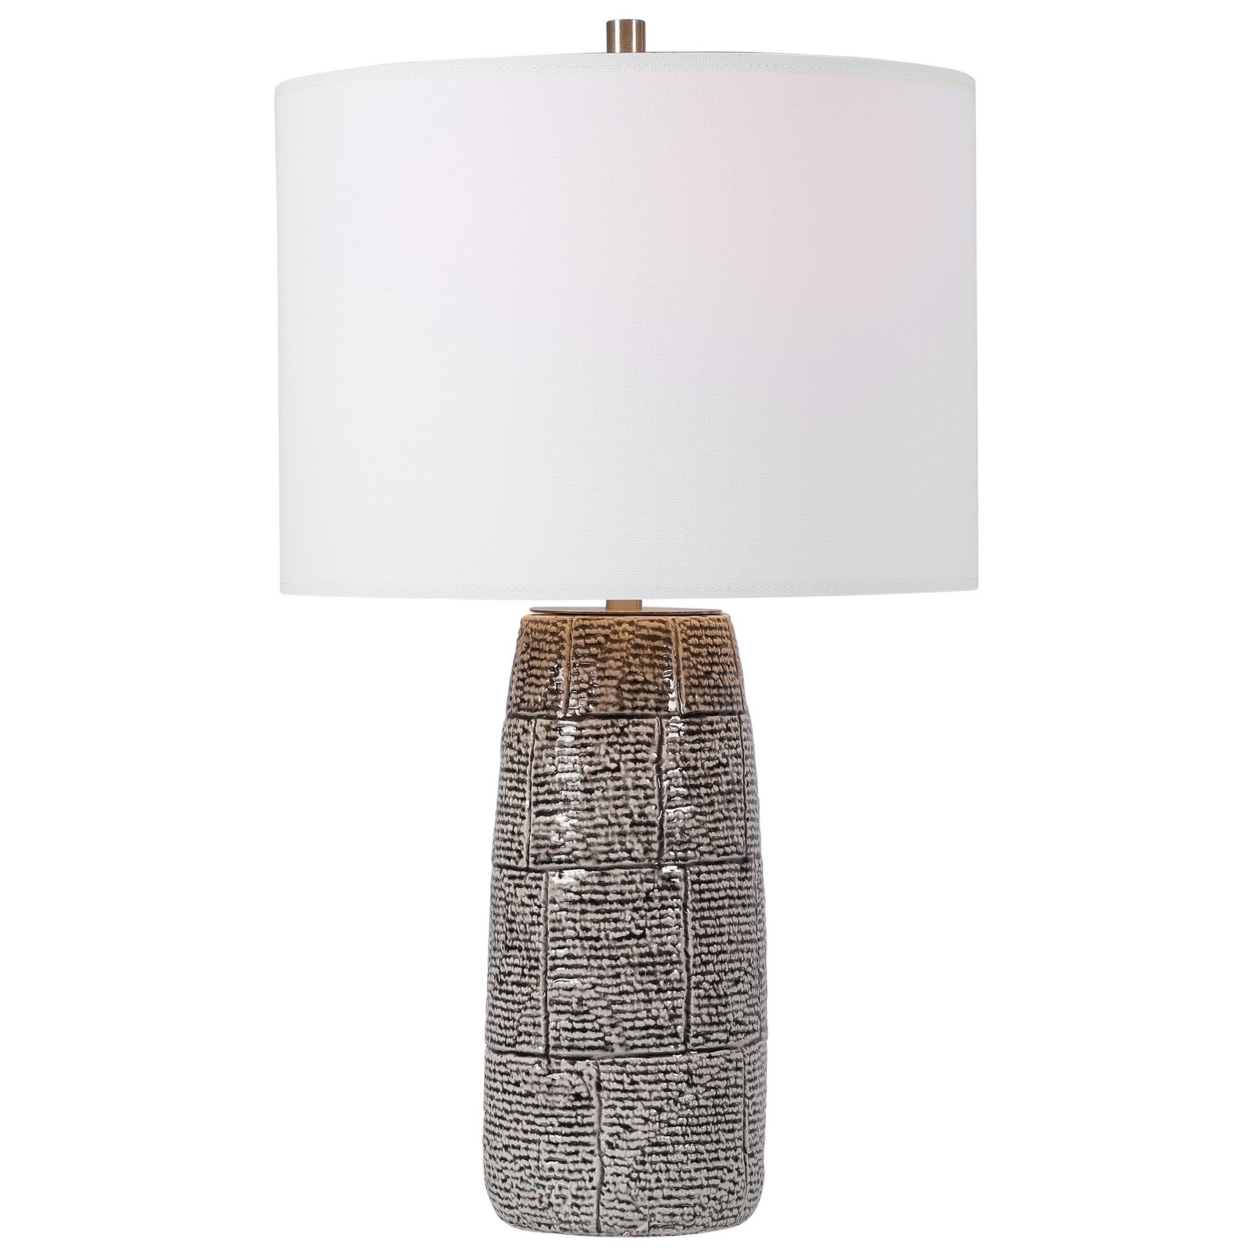 Ceramic Vase Shape Table Lamp With Brick Pattern, Gray- Saltoro Sherpi